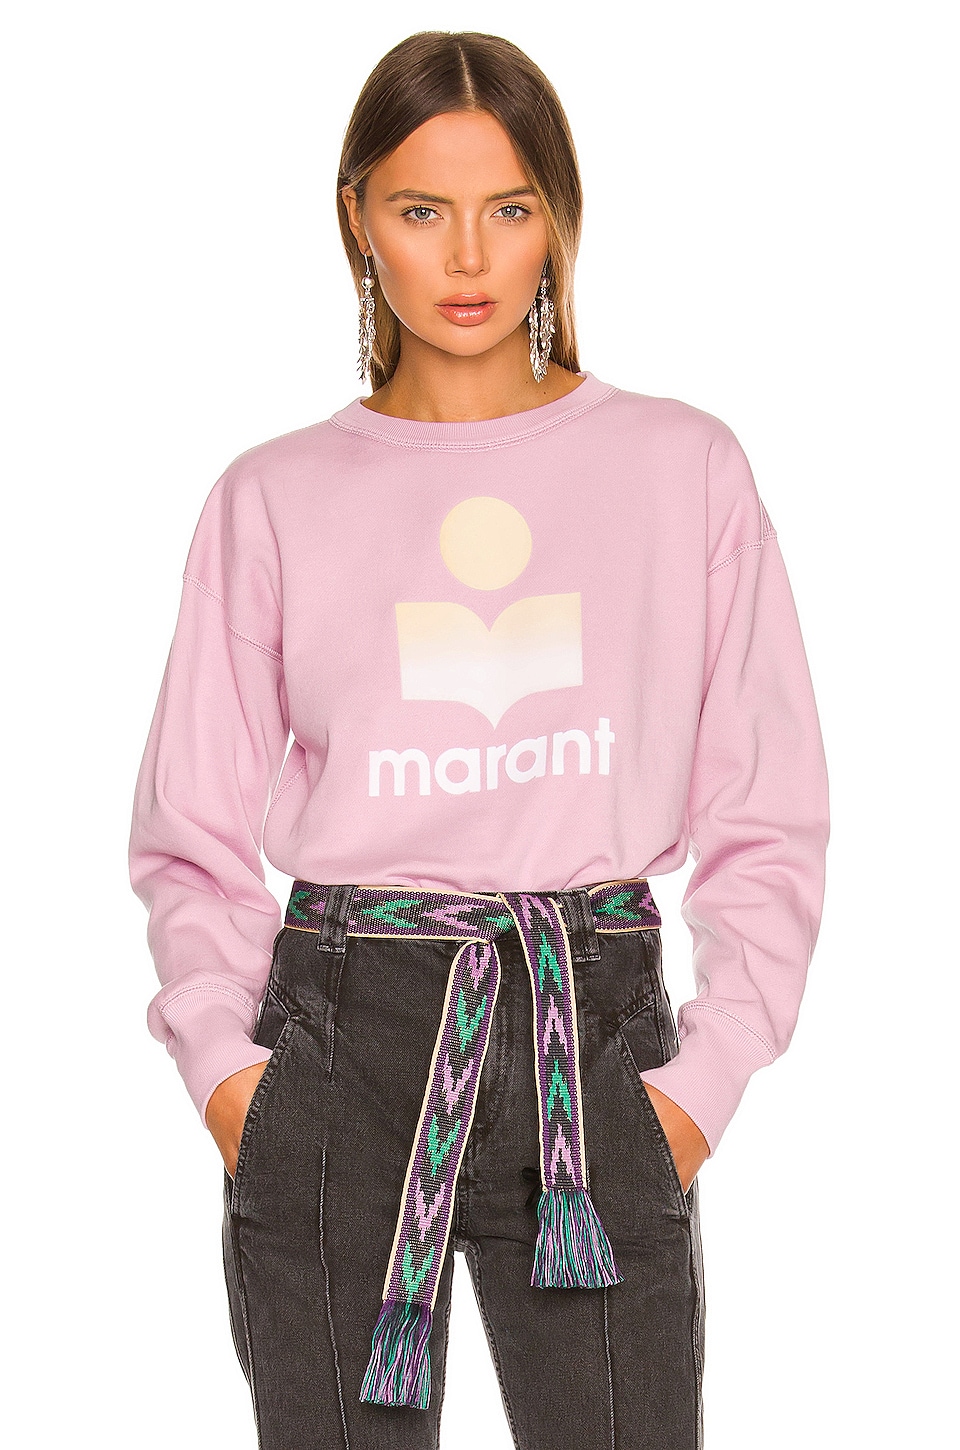 Isabel Marant Etoile Mobyli Sweatshirt in Light Pink | REVOLVE